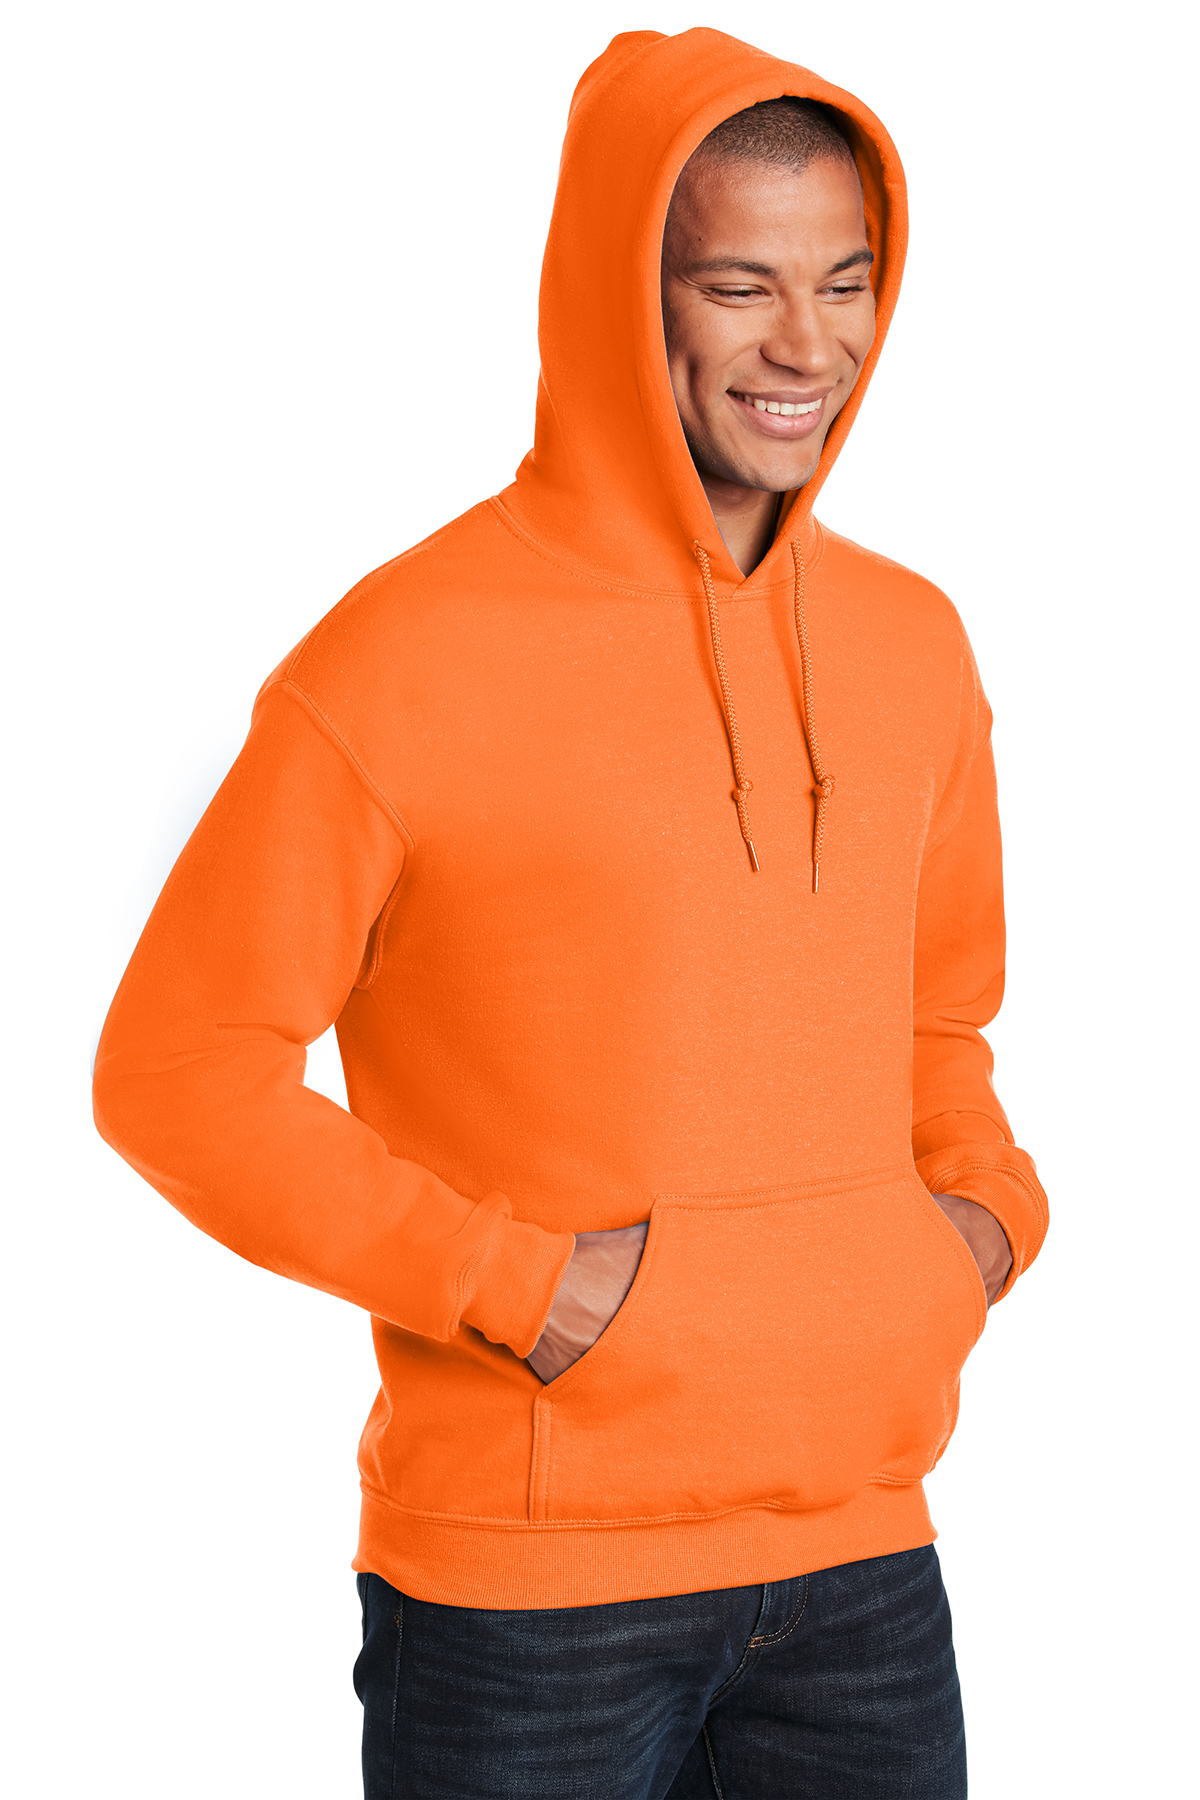 Gildan - Heavy Blend Hooded Sweatshirt | Product | Company Casuals